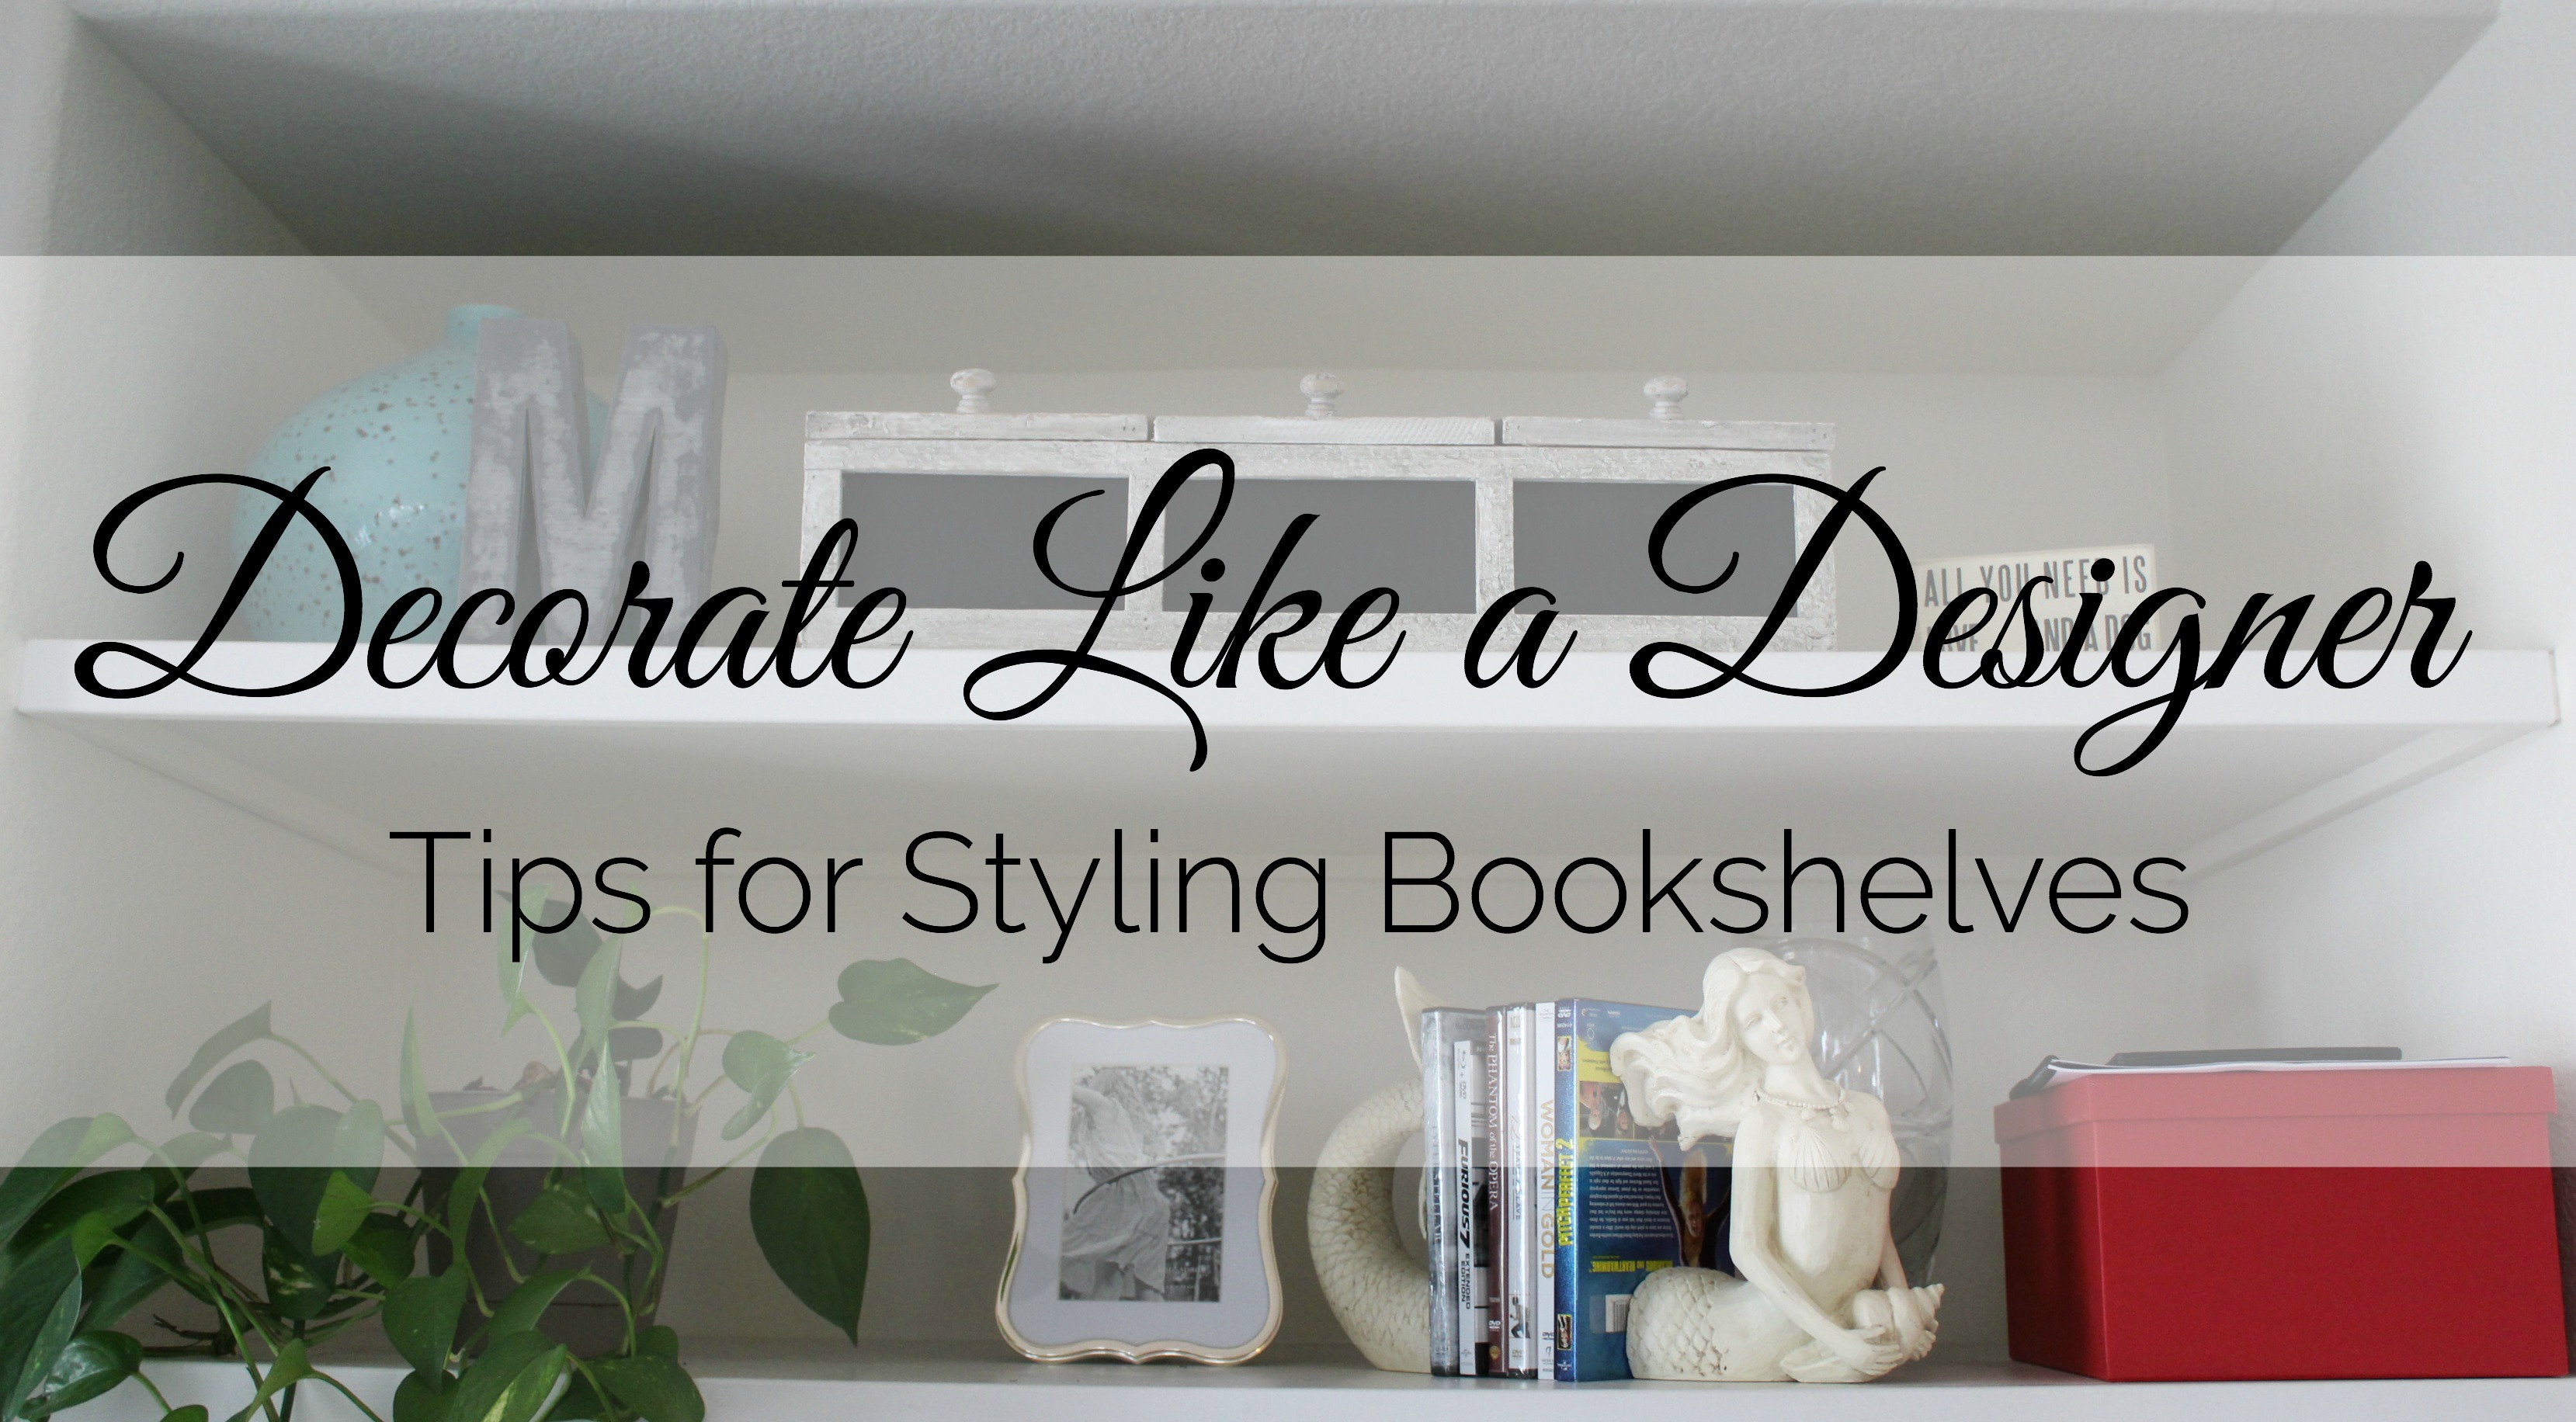 Tips for decorating bookshelves like a pro.